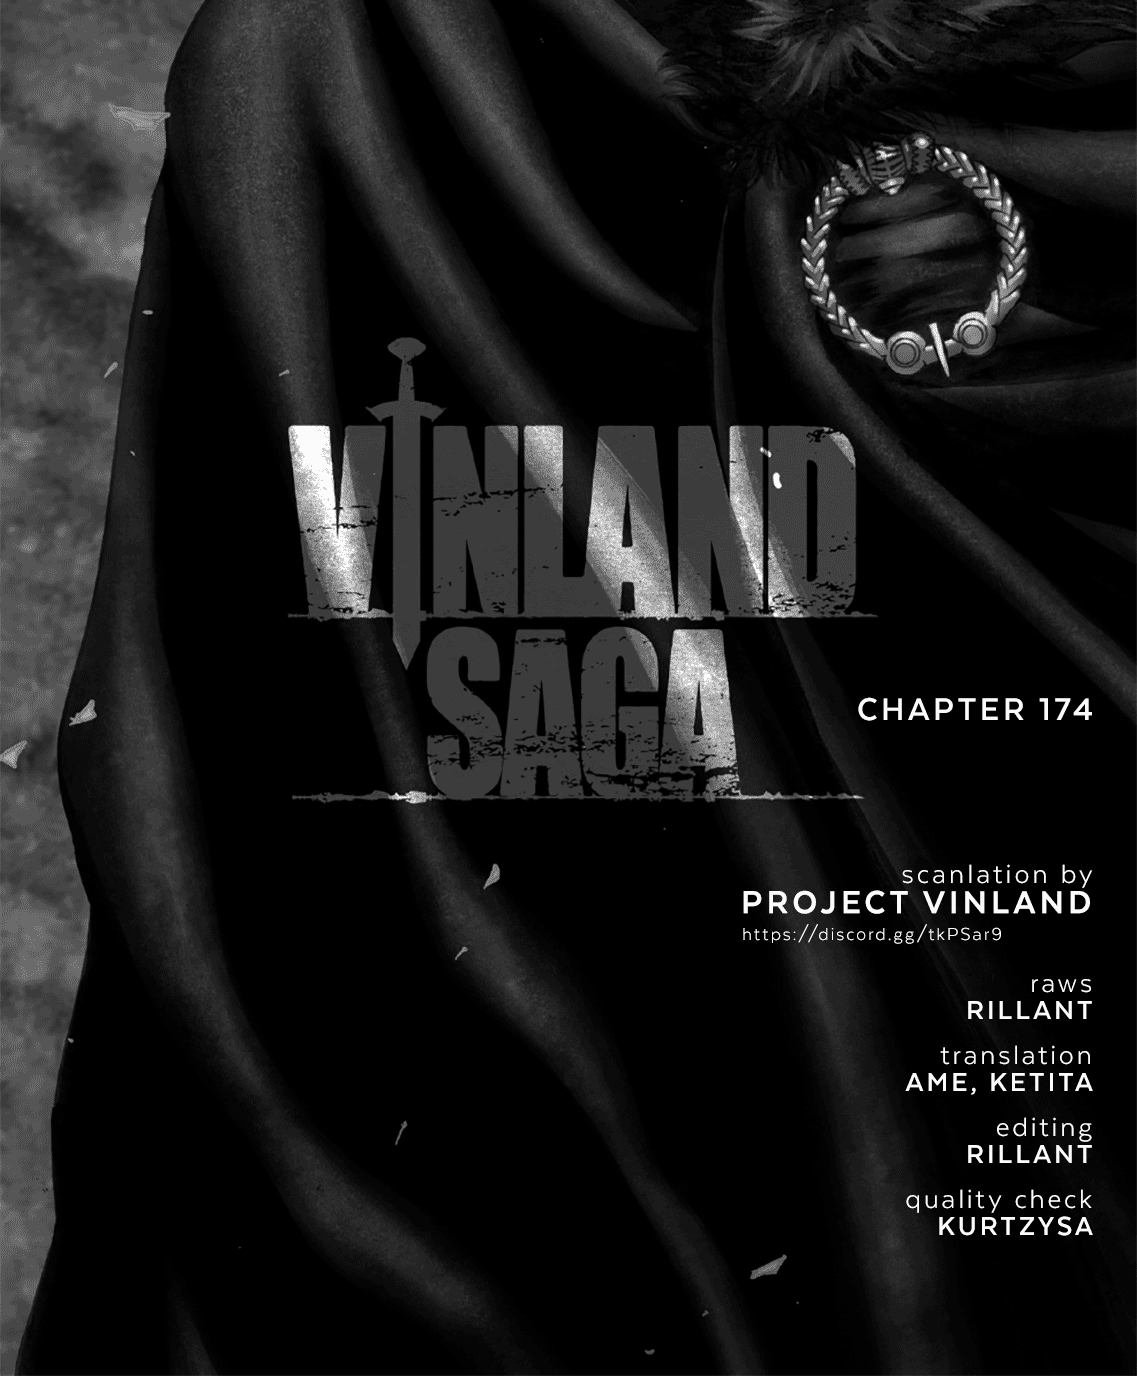 Vinland Saga Vol. 25 Ch. 174 Sailing West Part 8